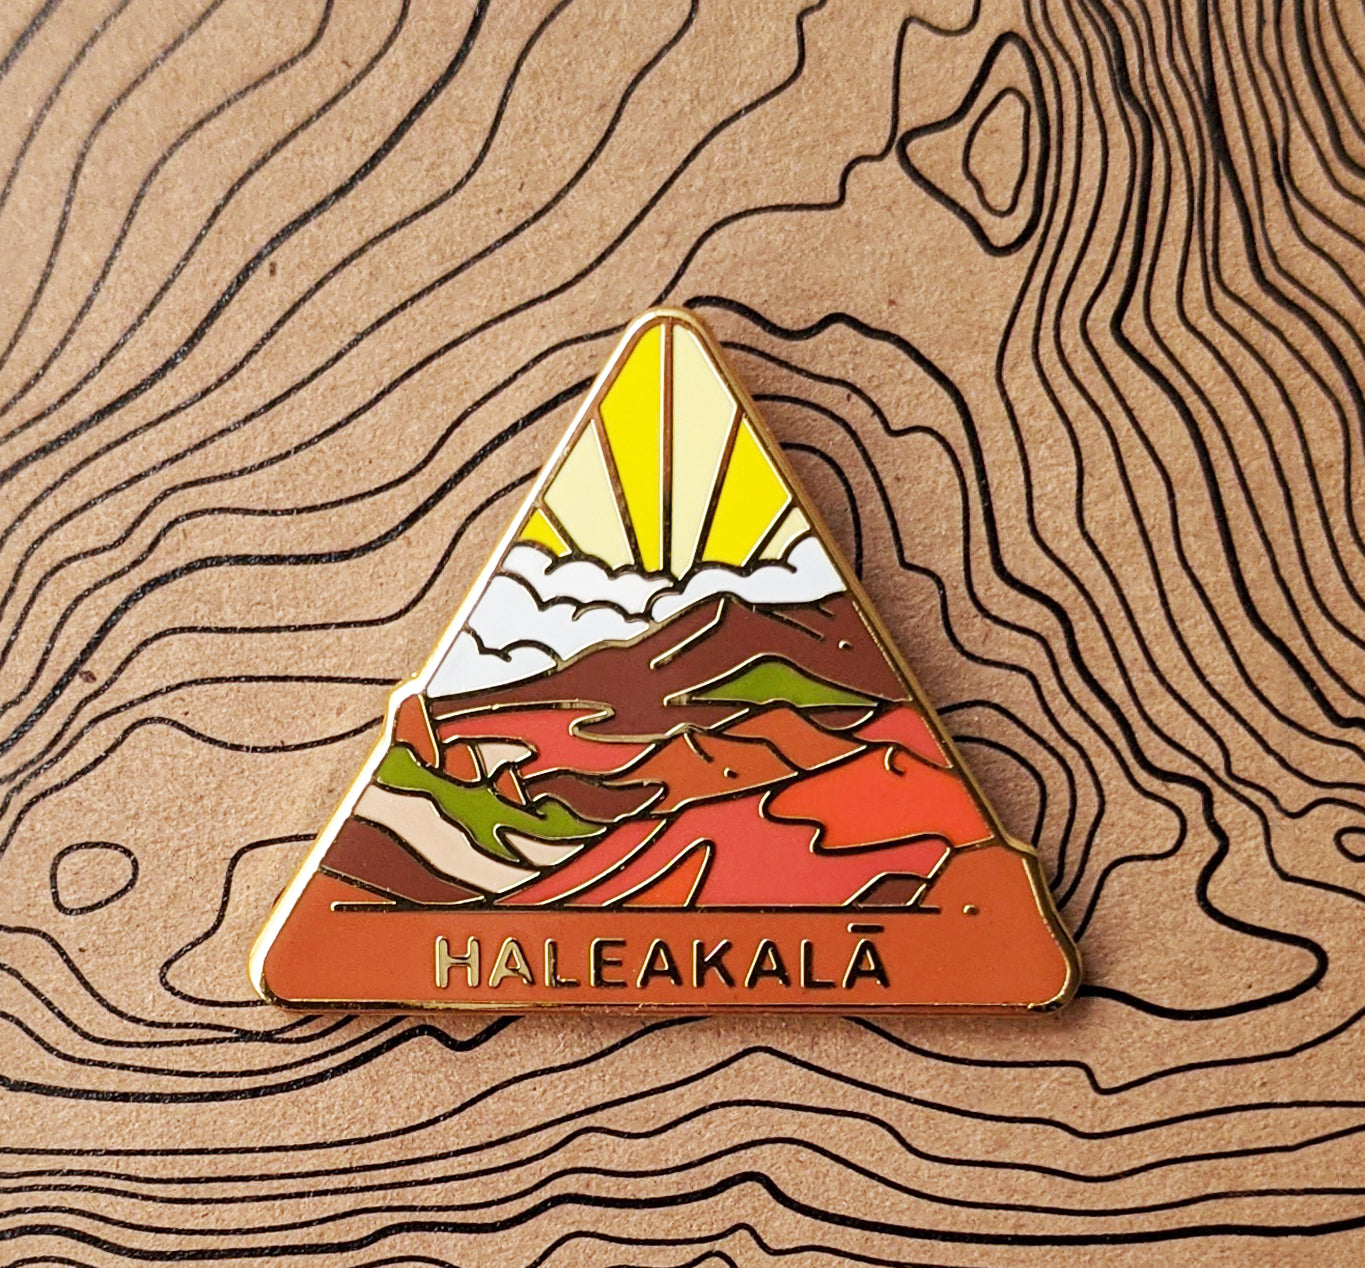 Triangle Haleakala national park enamel pin featuring a view of Haleakala's crater.